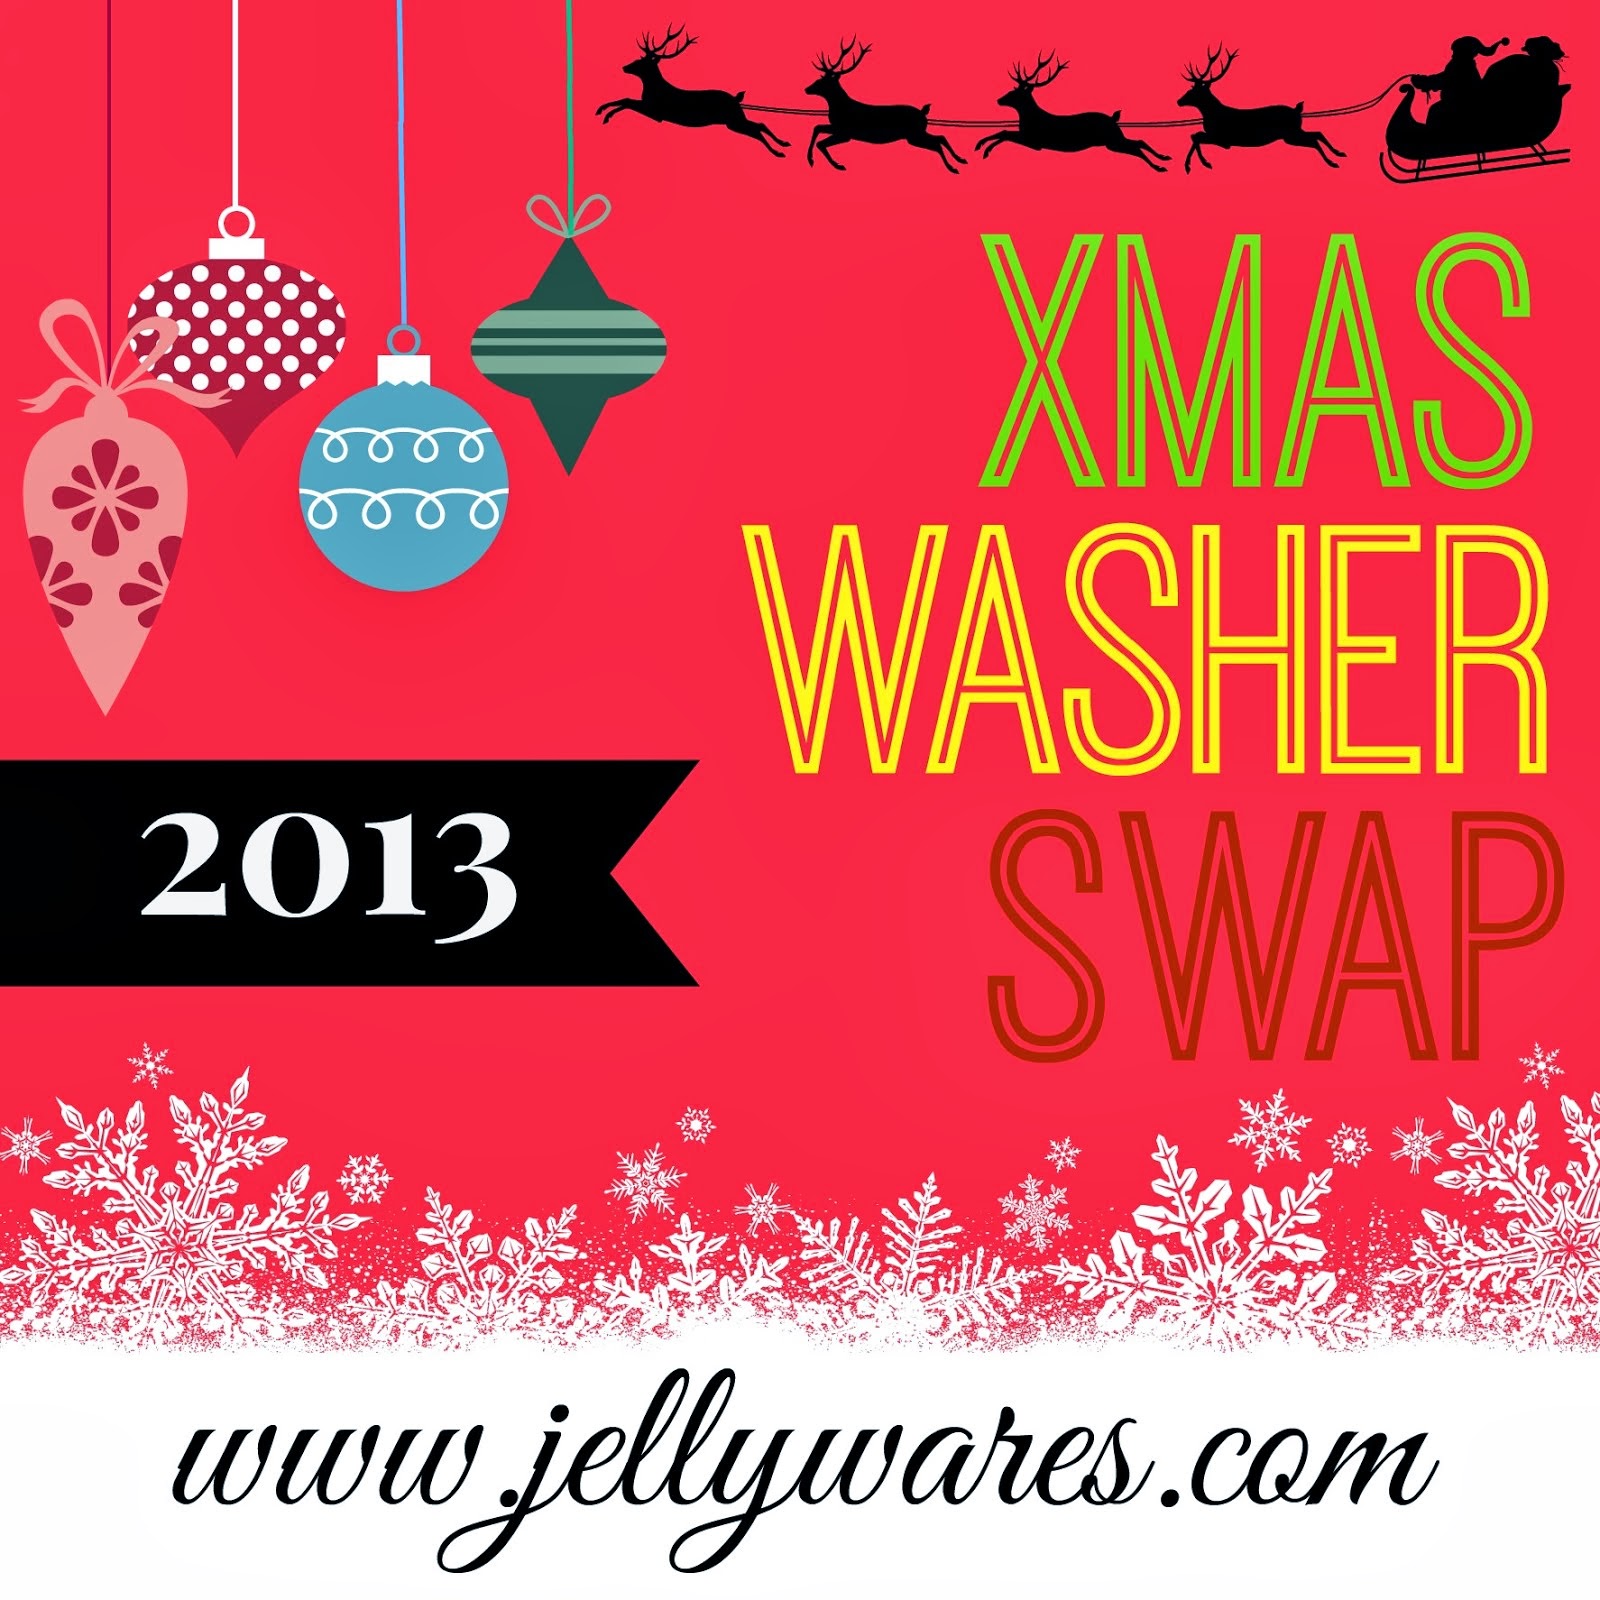 2013 xmas washer swap